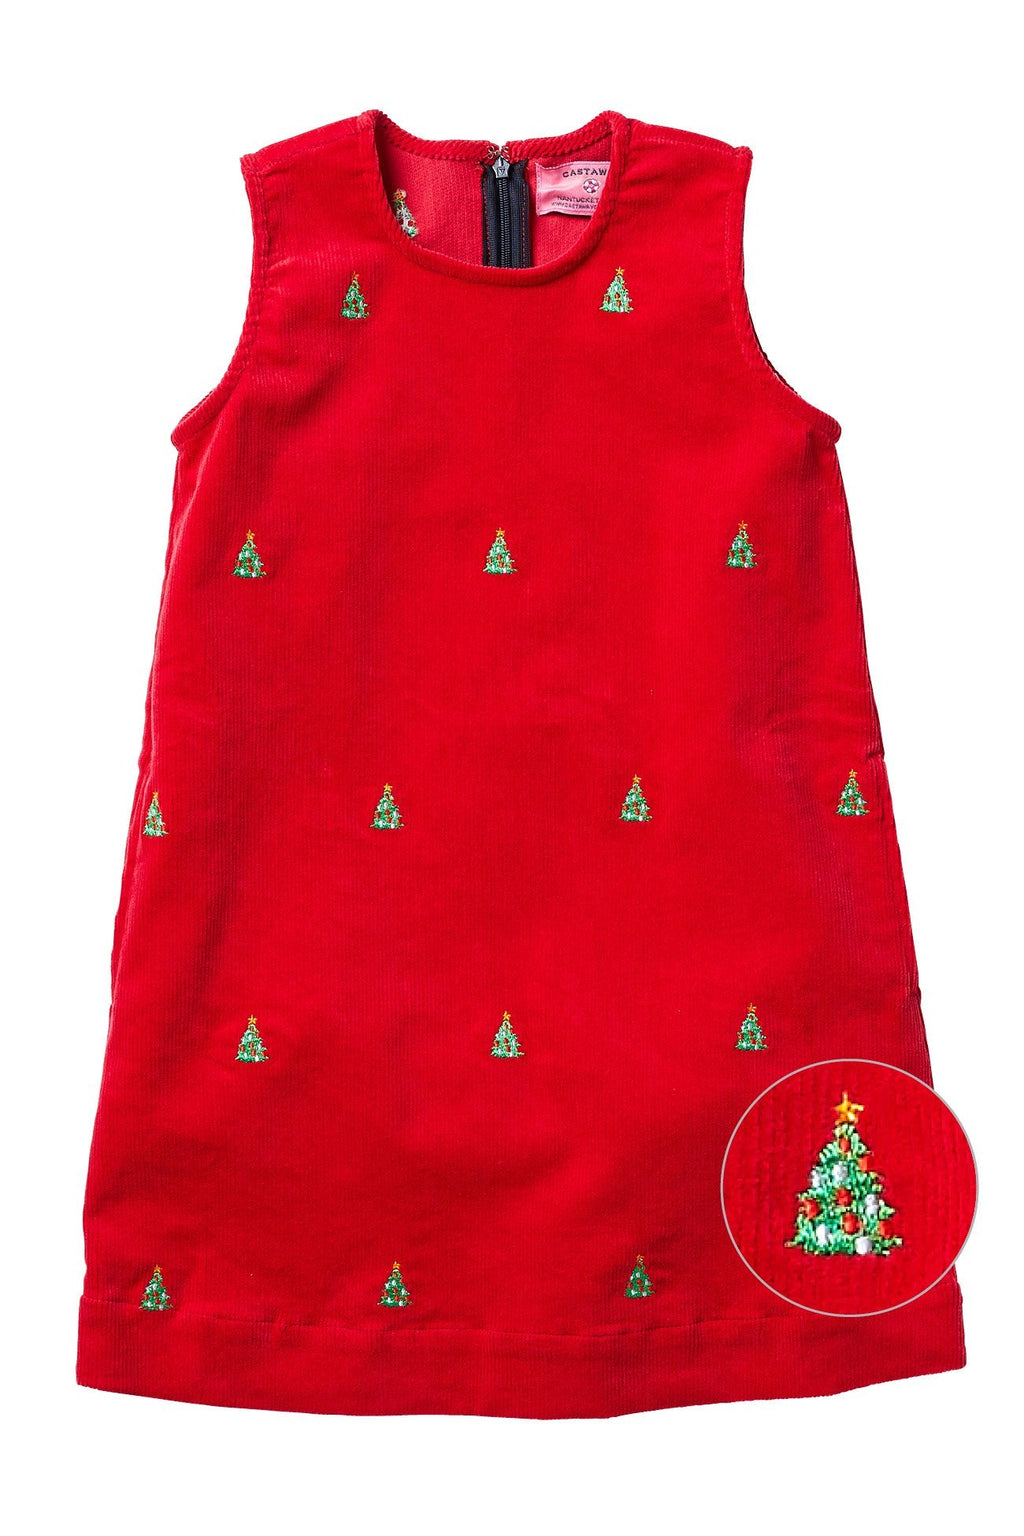 Girls Shift Dress Corduroy Crimson with Christmas Tree - Castaway Nantucket Island